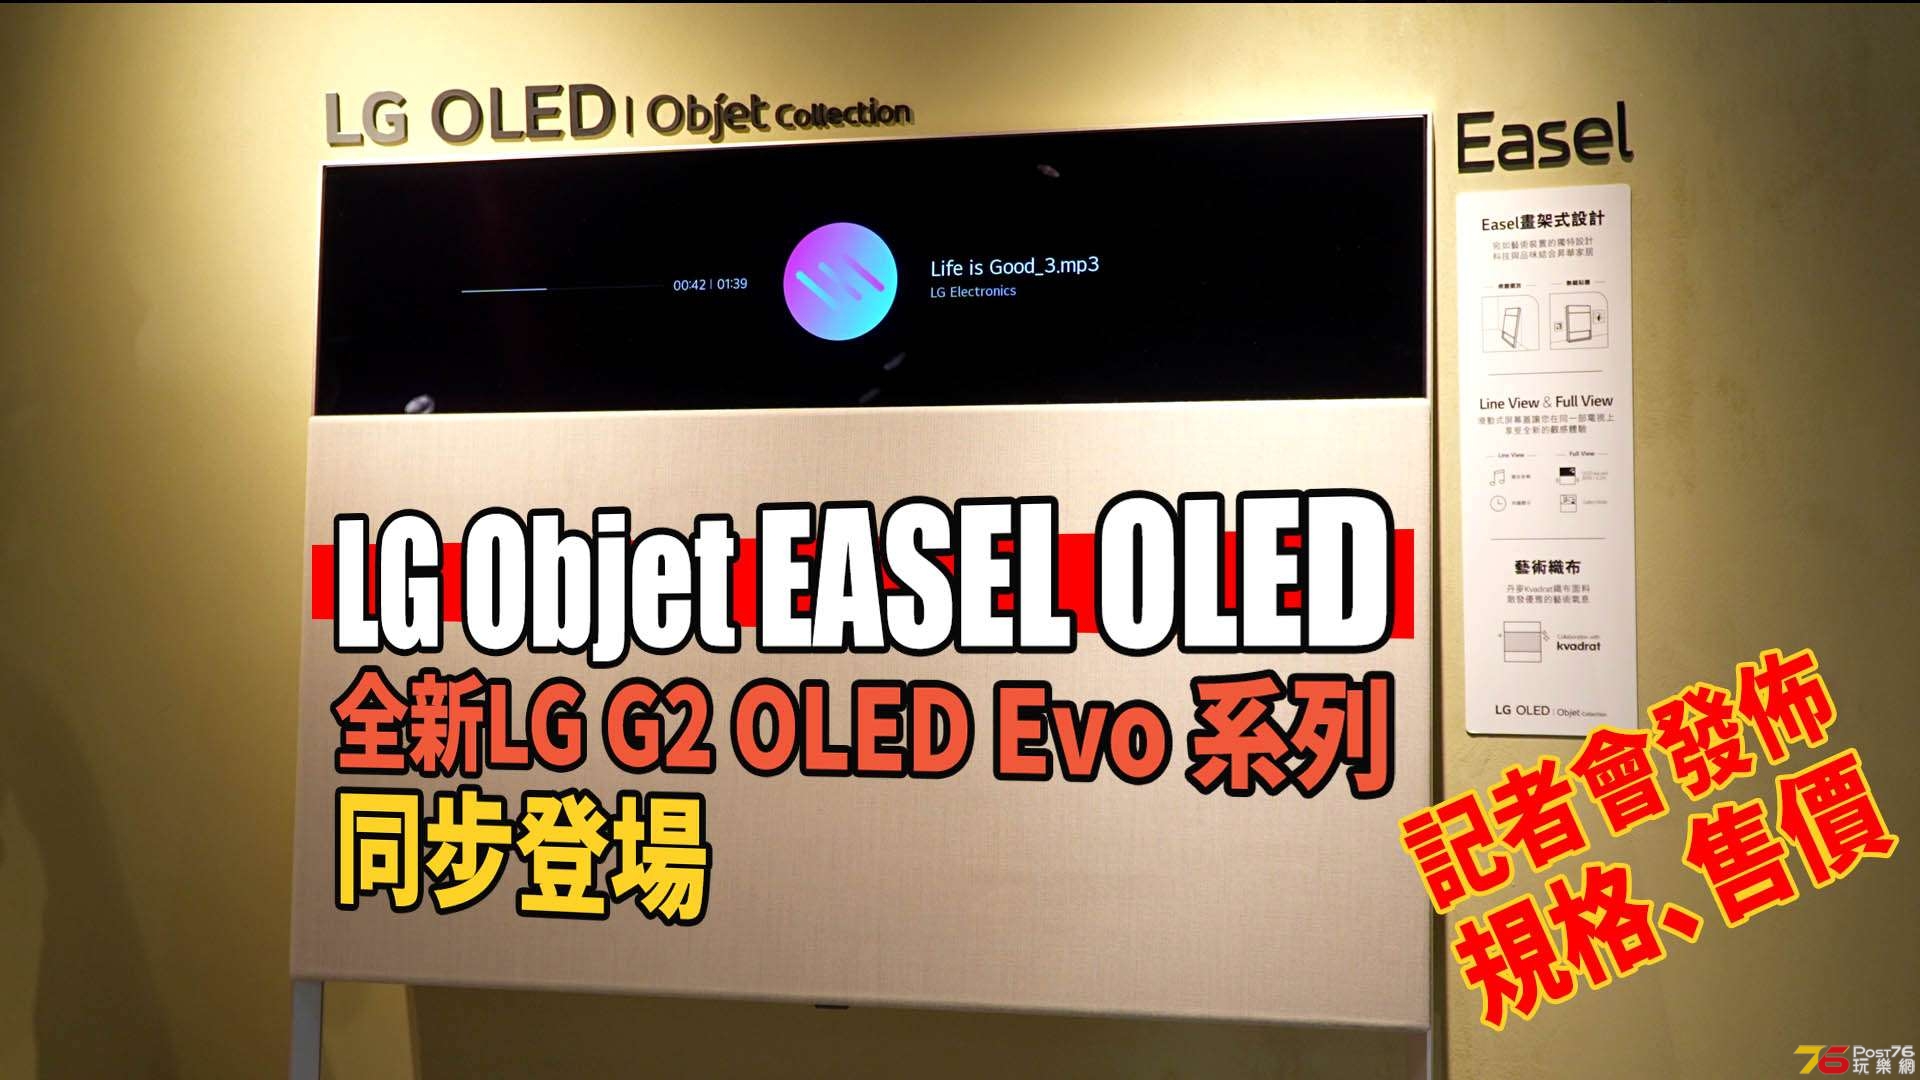 LG G2 OLEDEVO EASEL TV Press forum copy.jpg